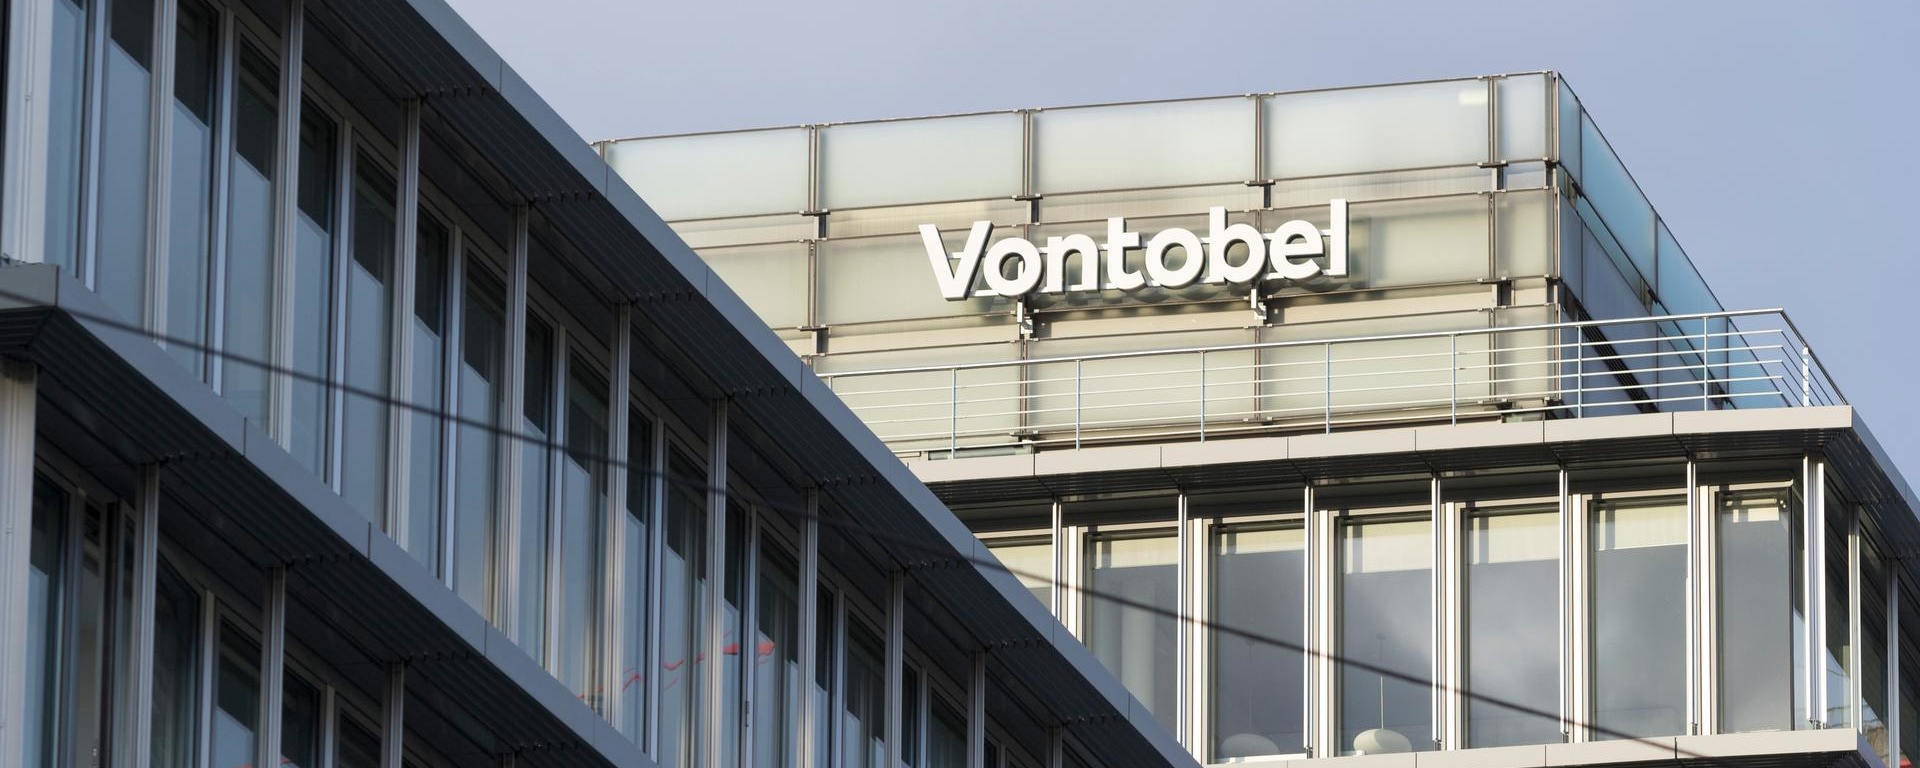 Vontobel Holding AG in Zurich - close-up of the logo on the Vontobel main building